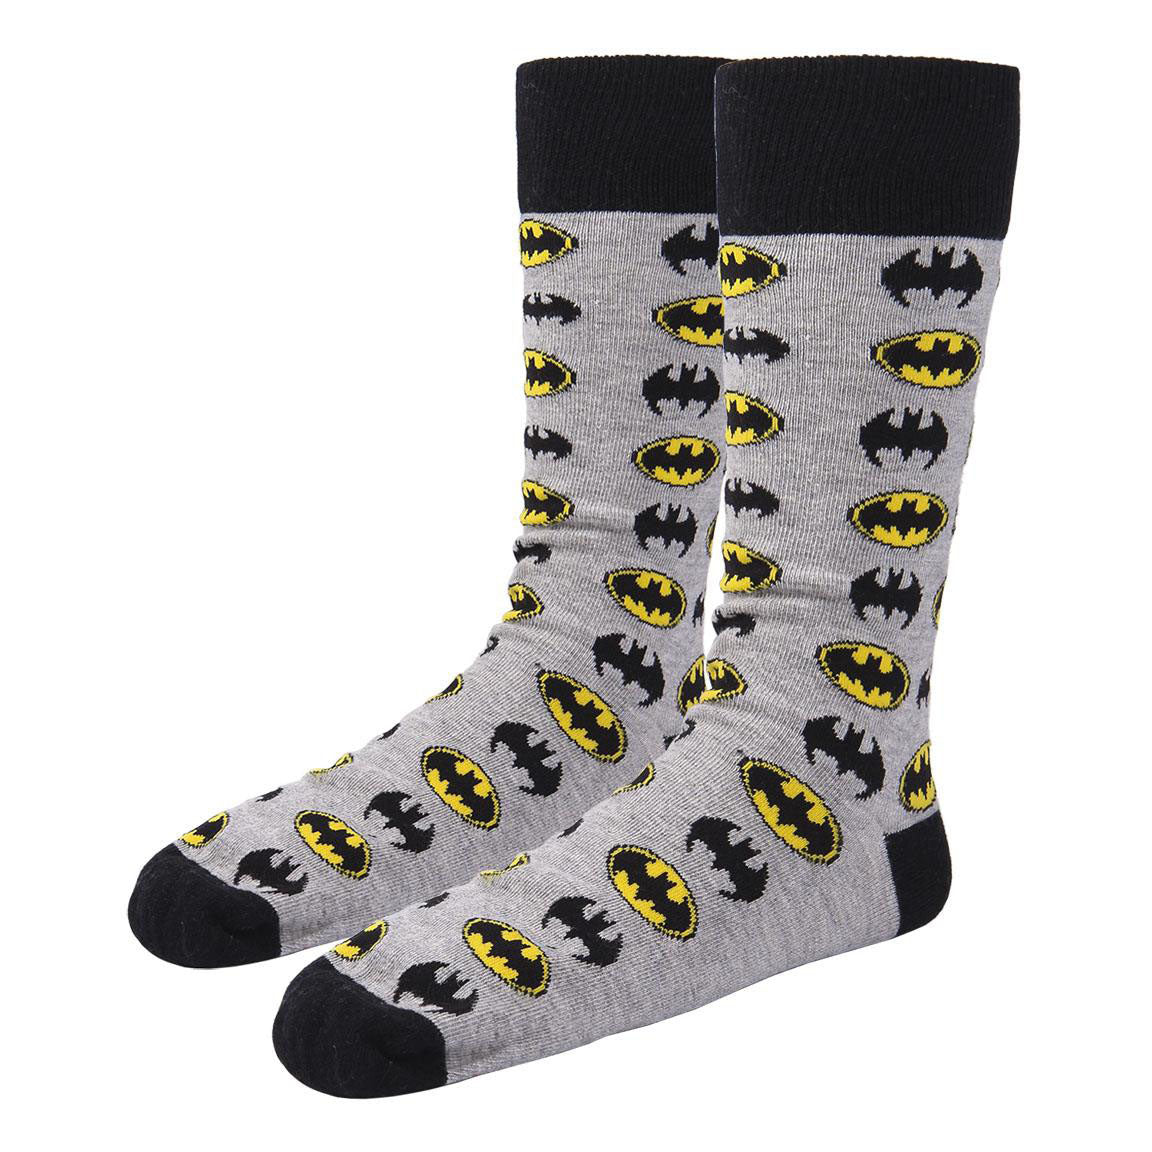 Pack 3 Pairs of DC Comics Socks - Batman 